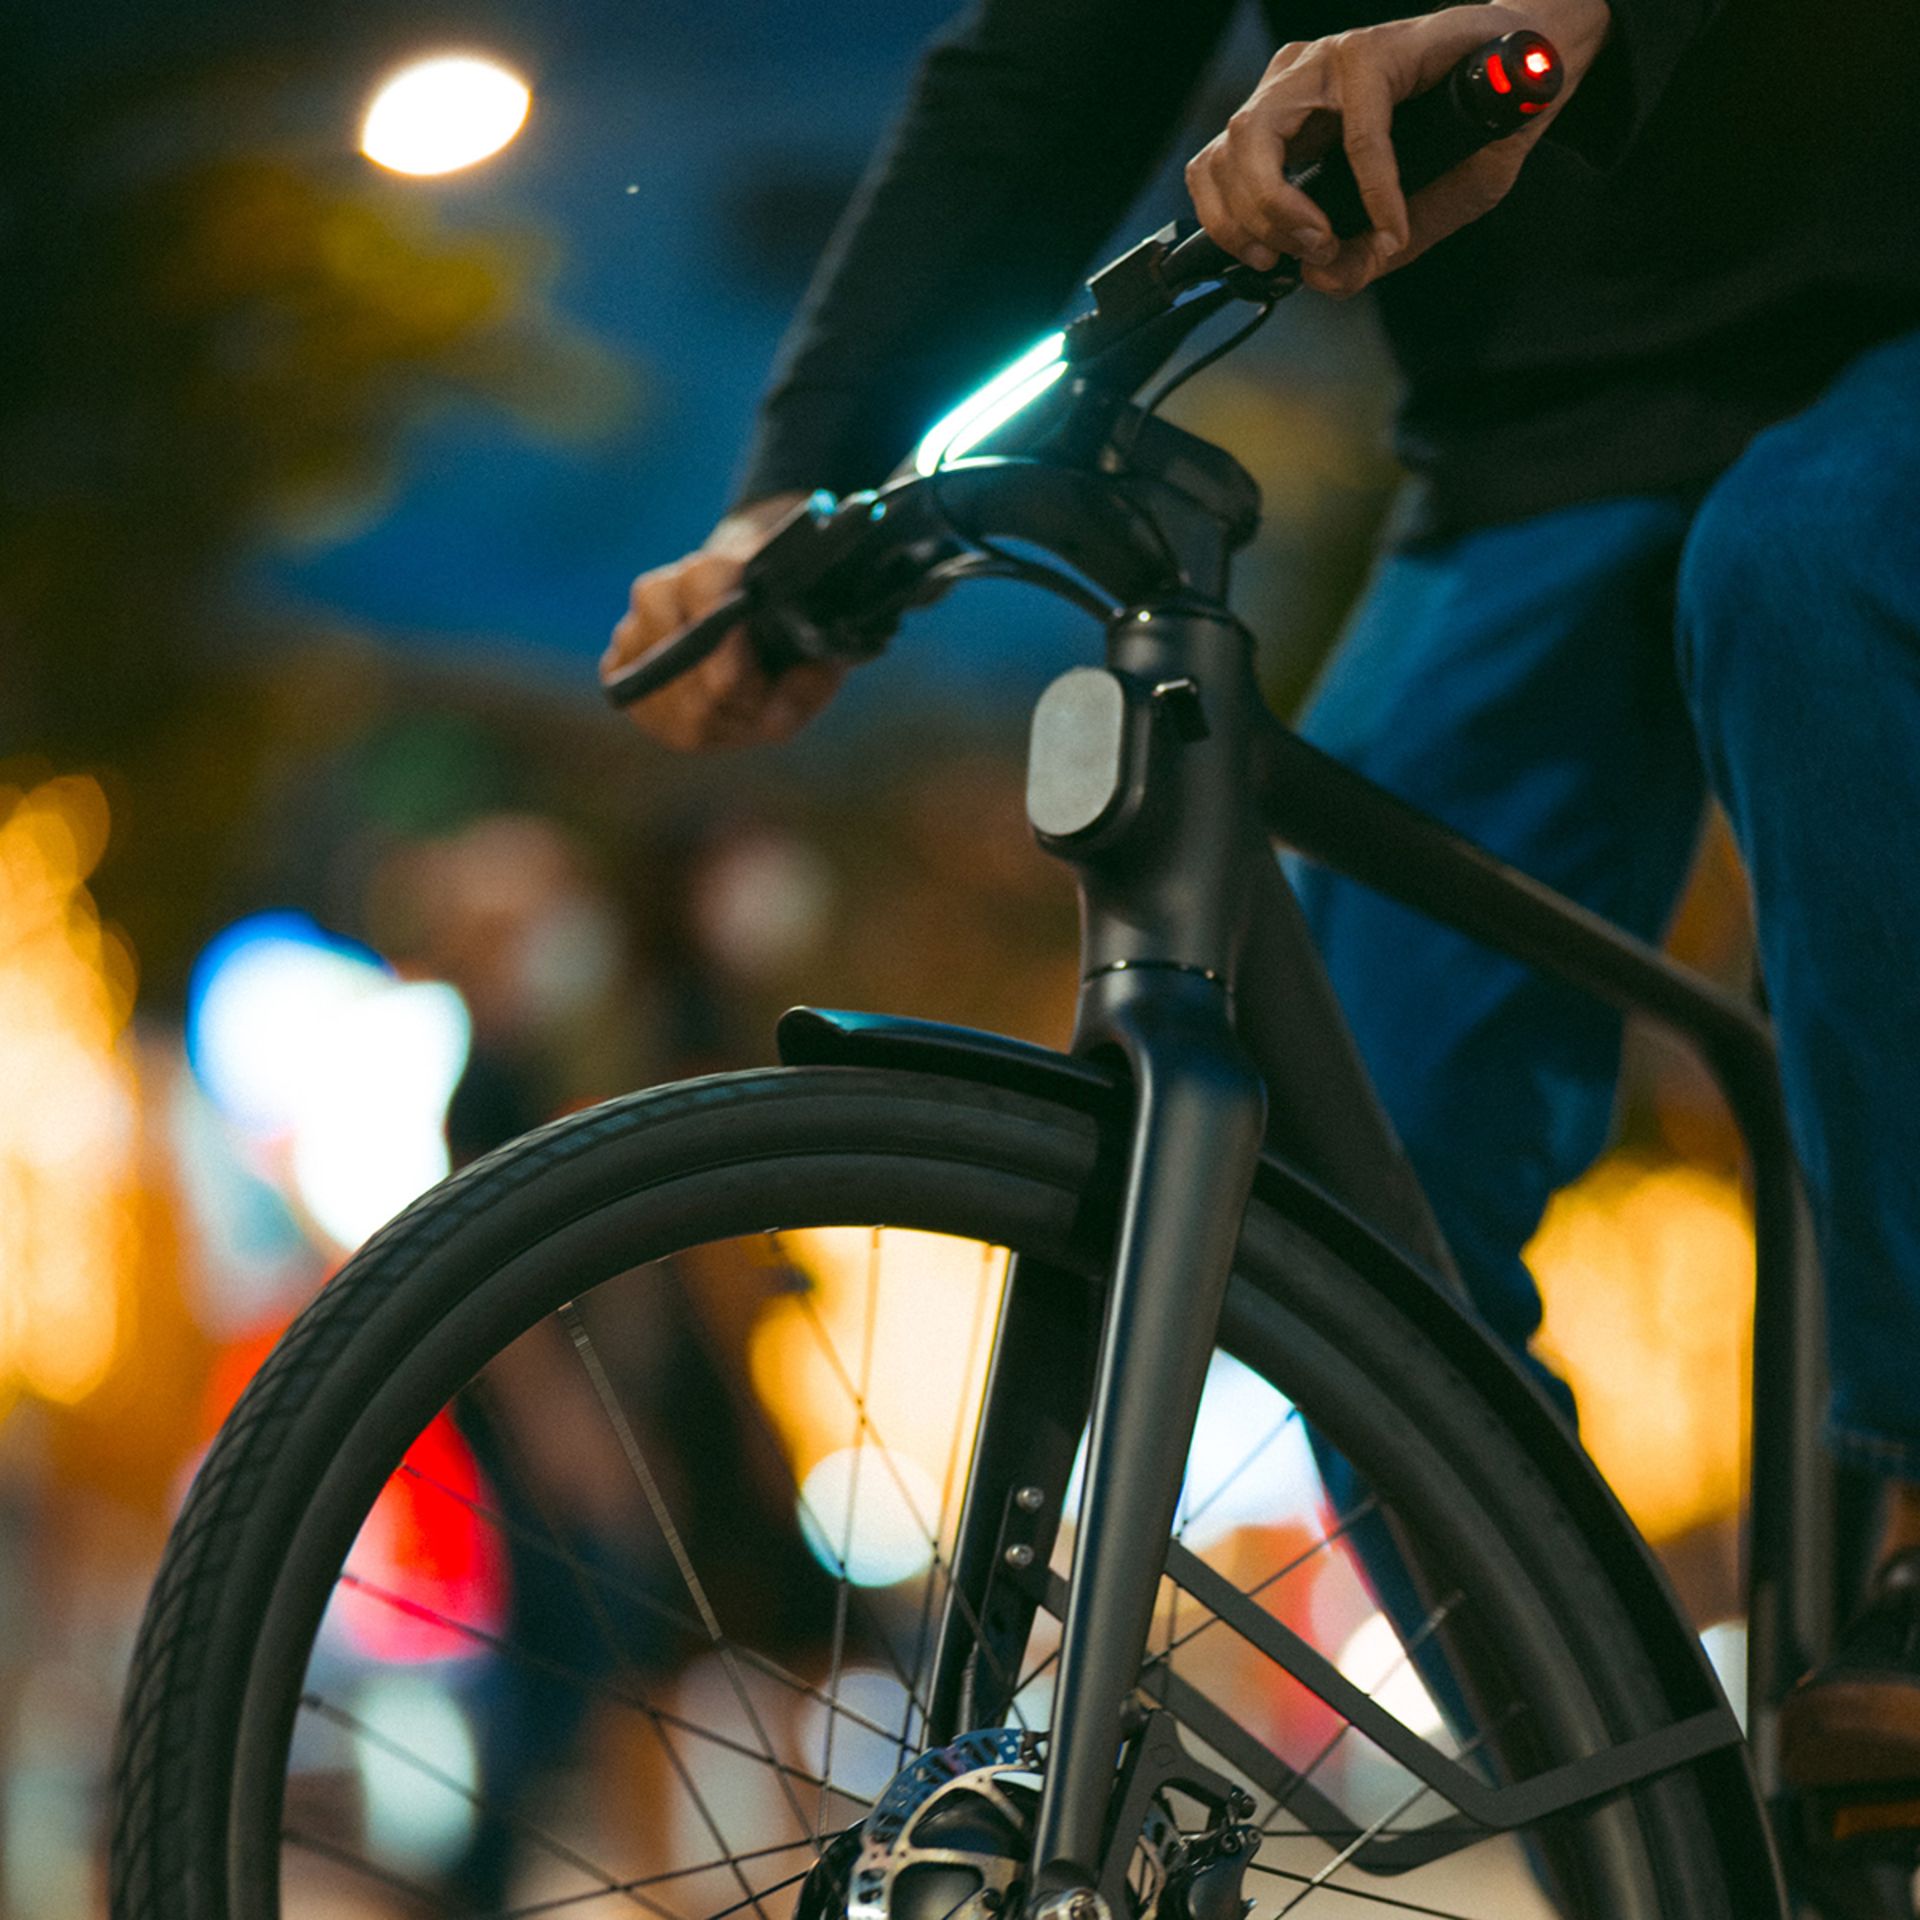 Modmo Saigon+ Electric Bicycle - RRP £2800 - Size S (Rider: 140-155cm) - Image 16 of 19